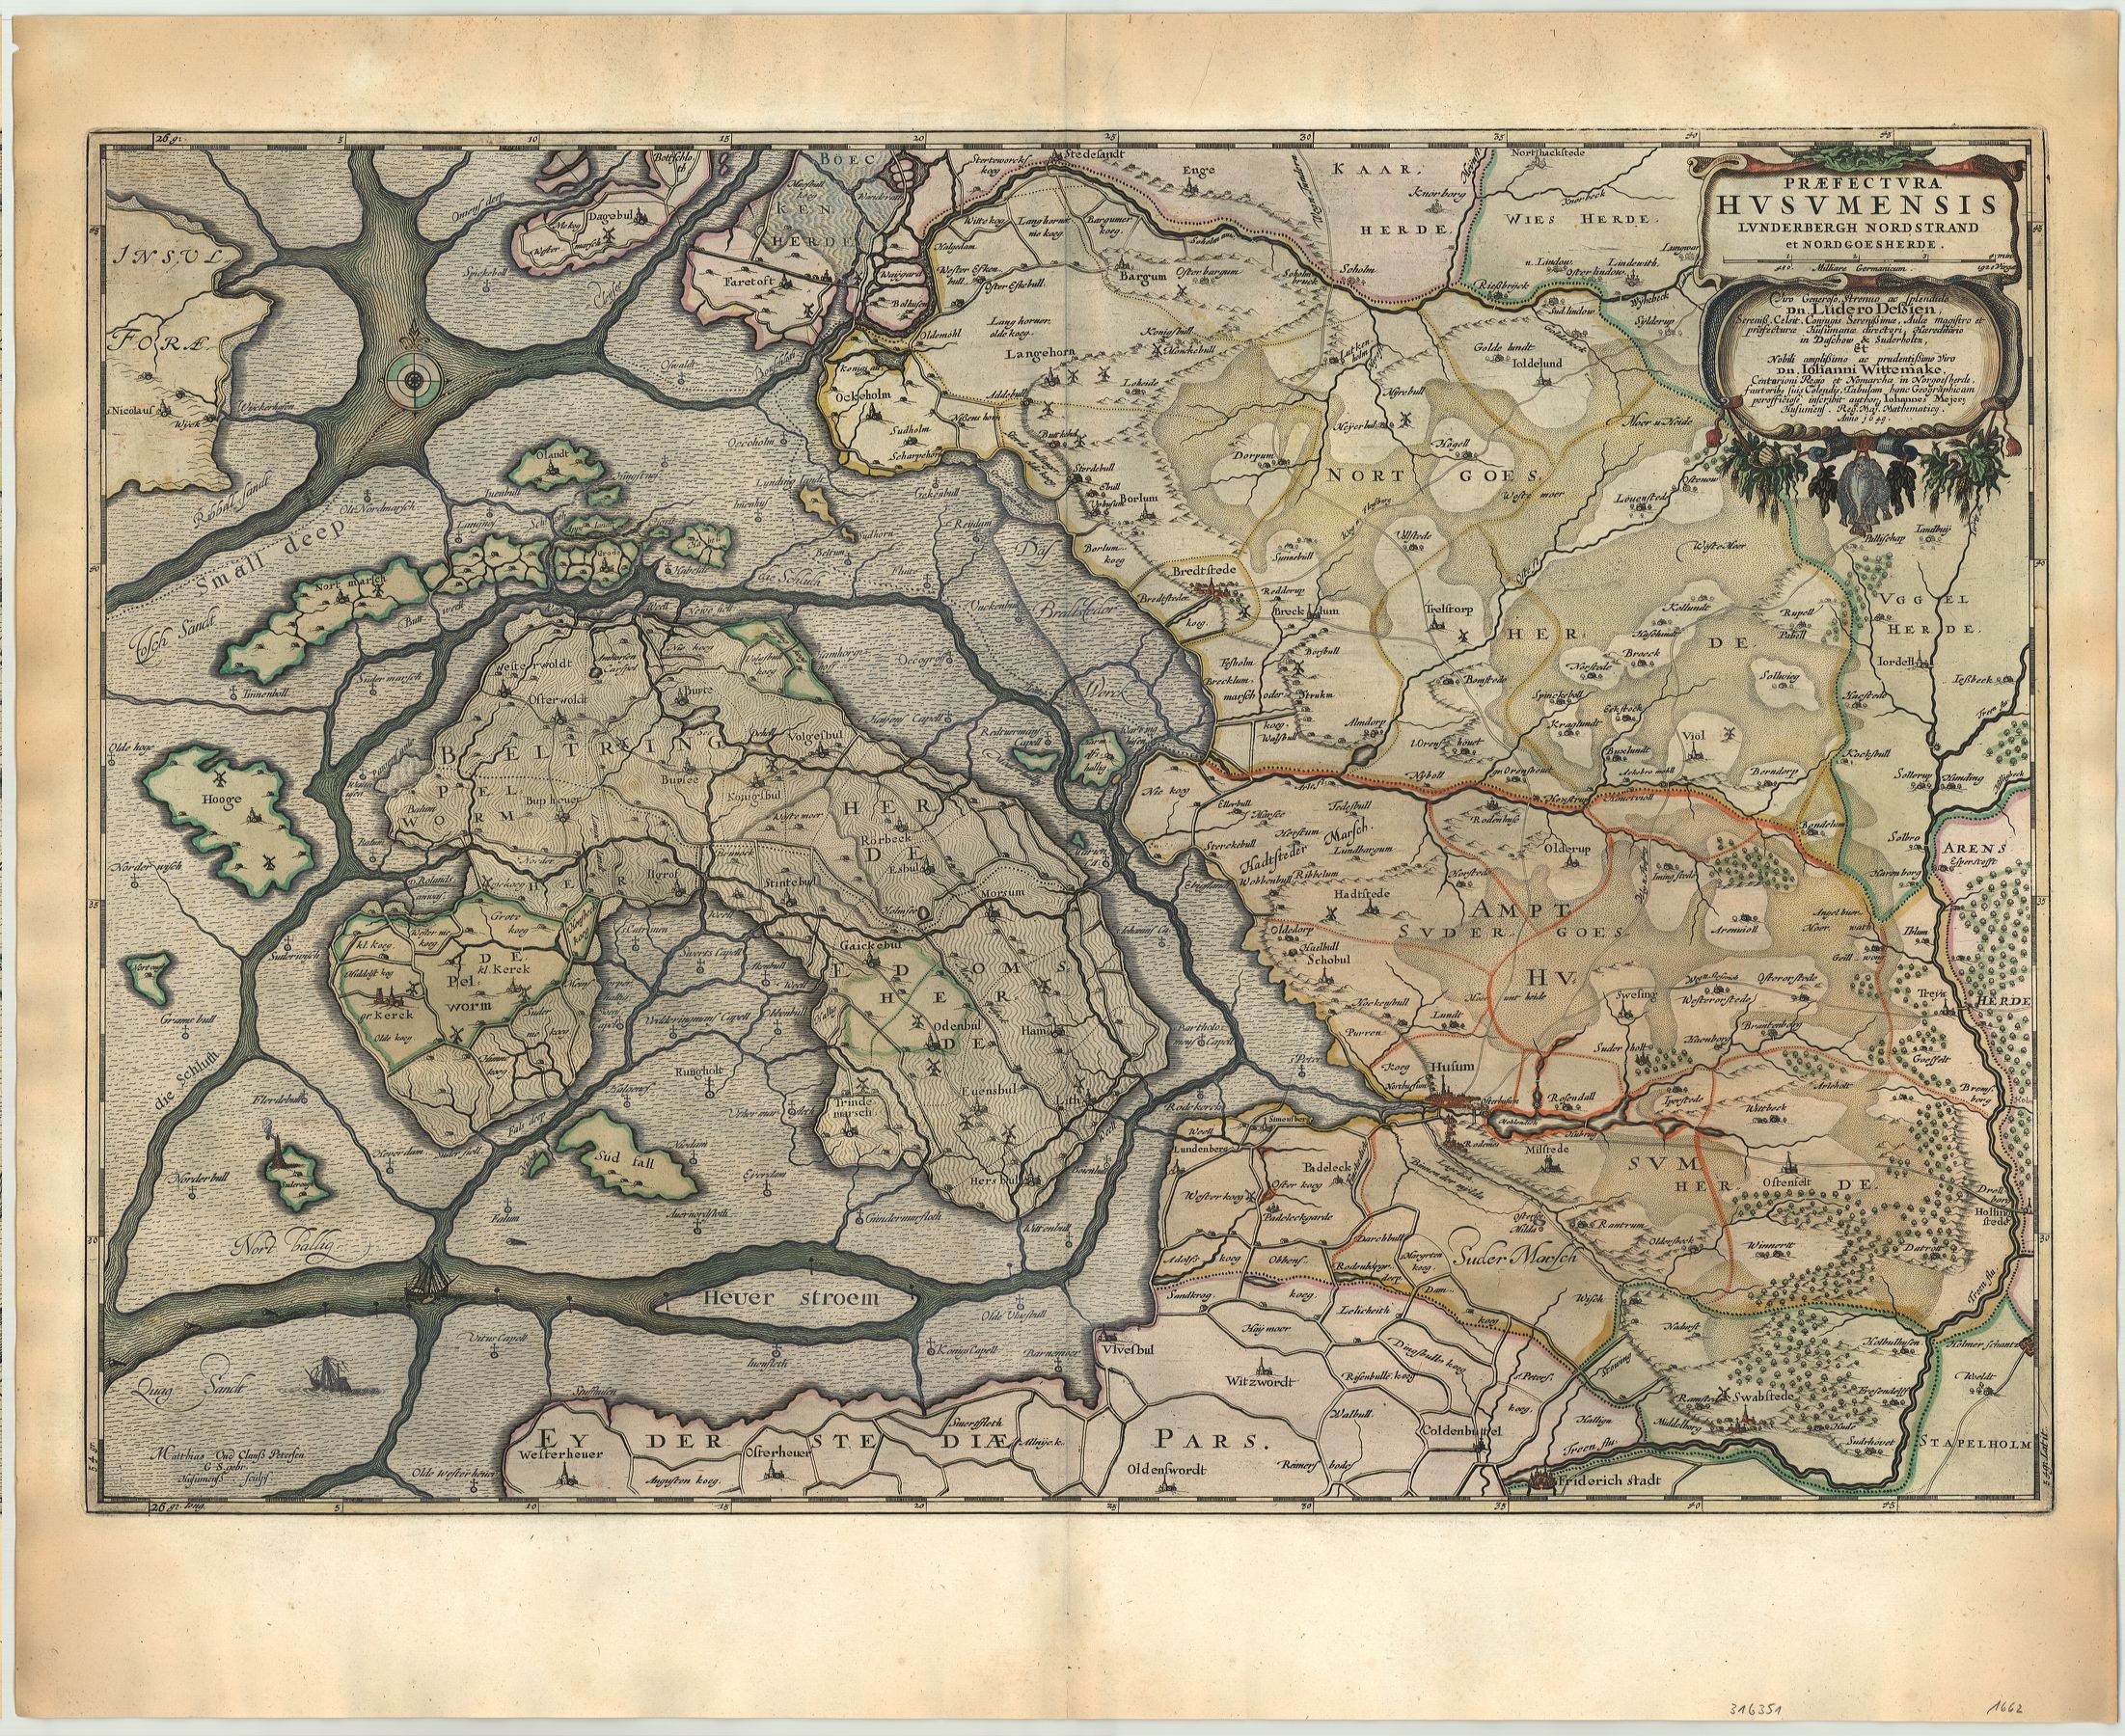 R2759  Blaeu, Joan; Mejer: Praefectura Husumensis Lunderbergh Nordstrand et Nordgoesherde 1662